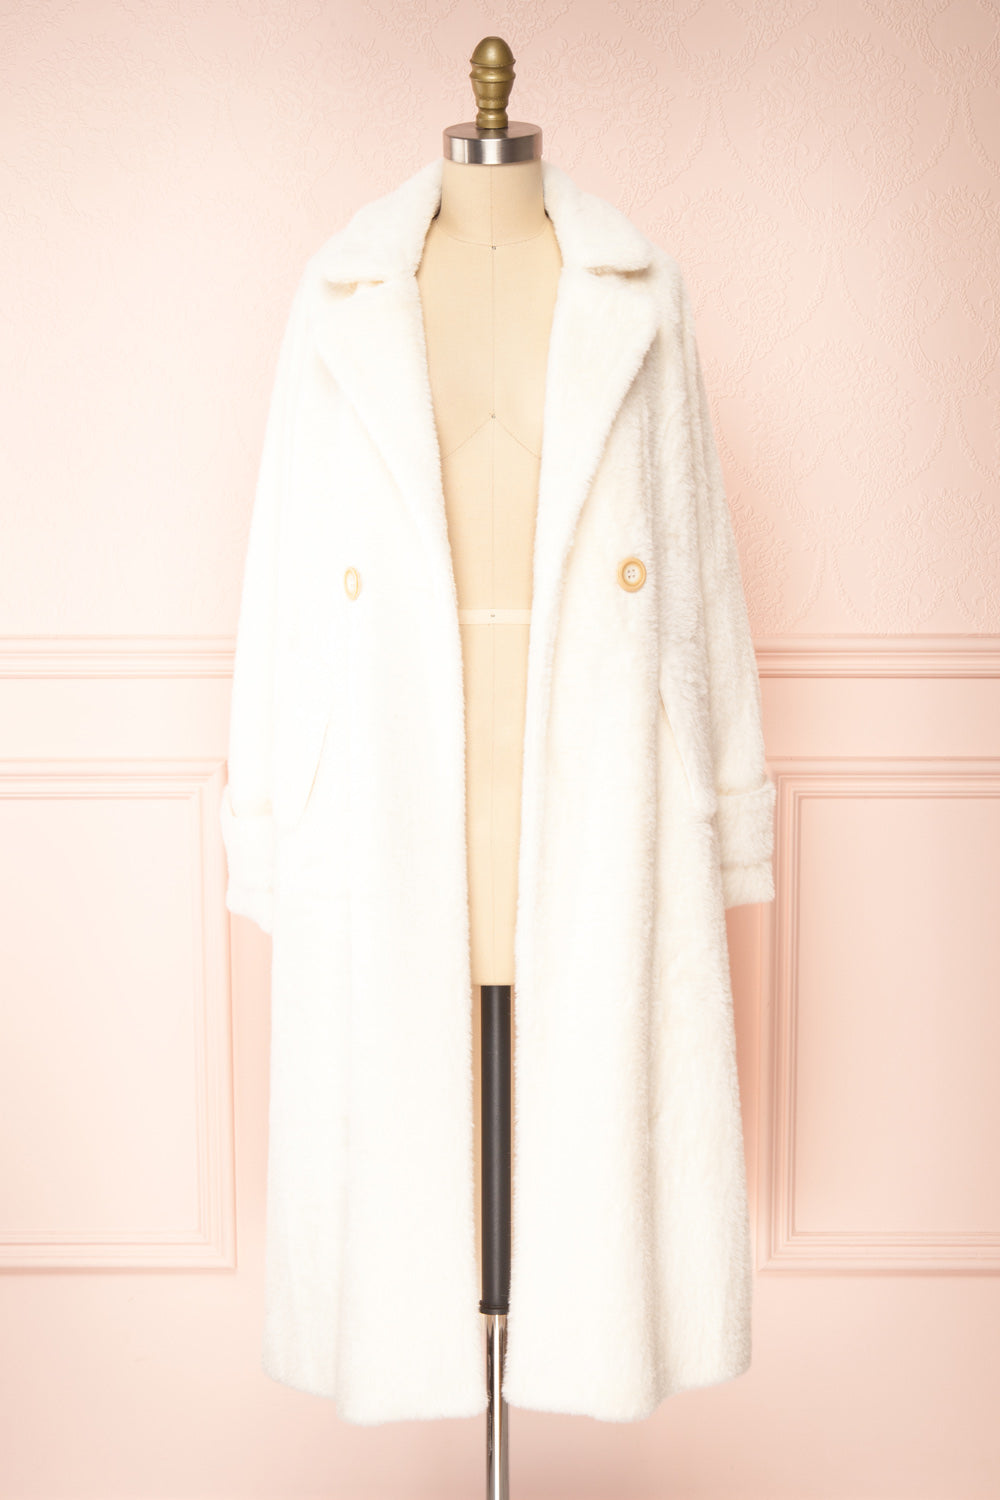 Kristalo | White Over-Sized Faux Fur Coat